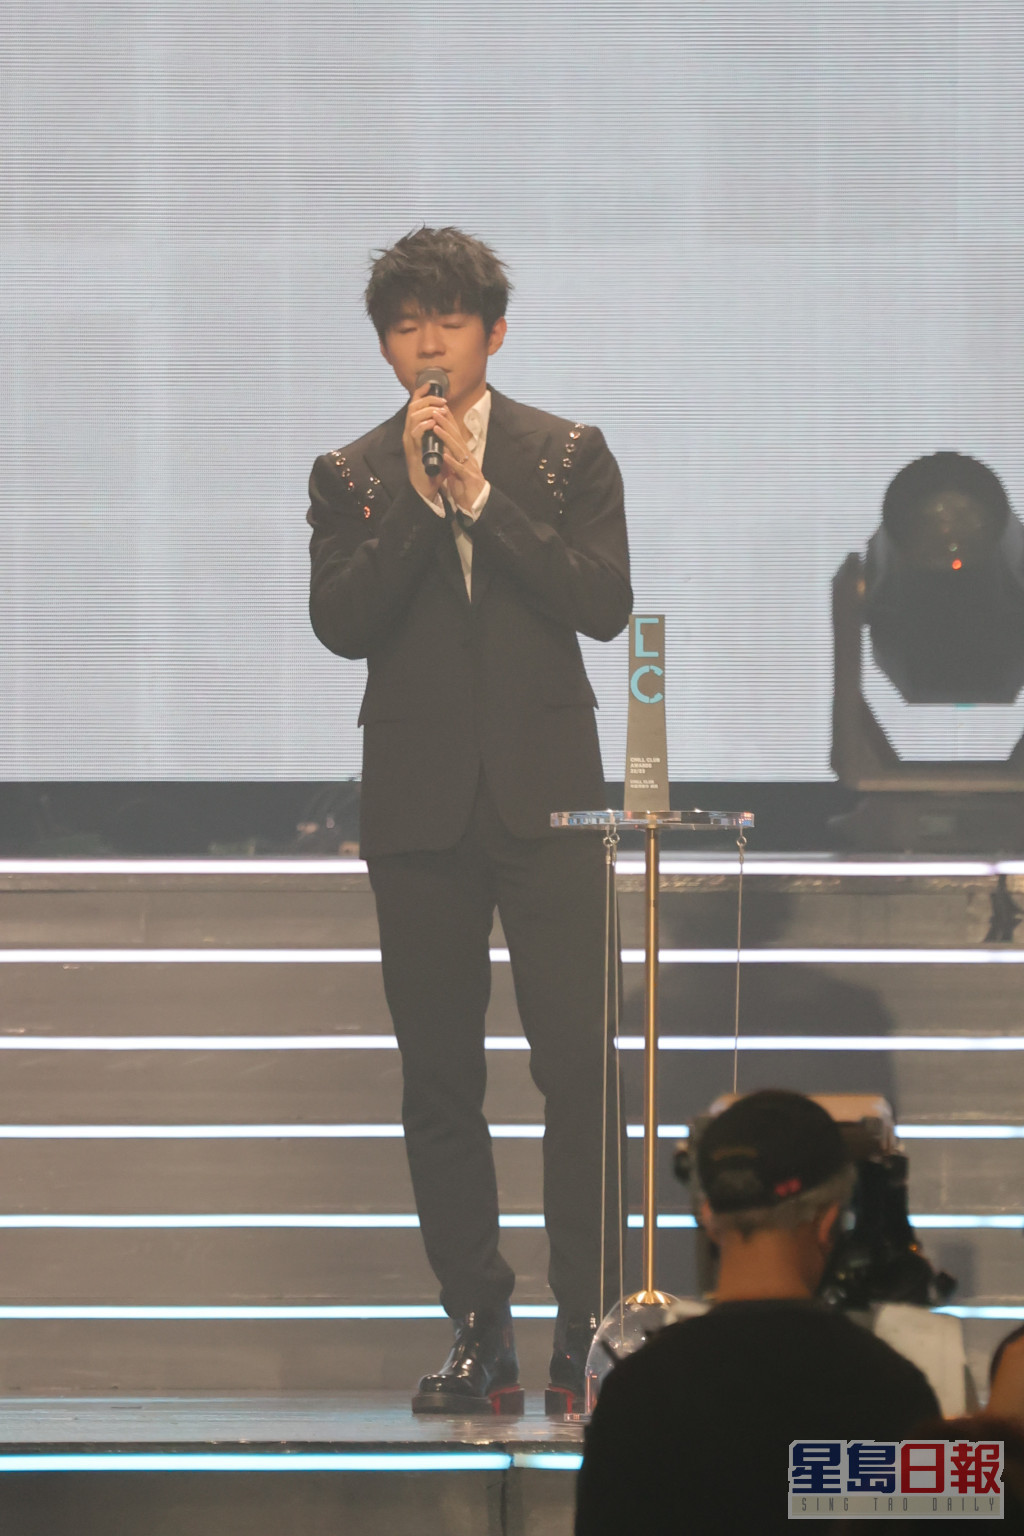 Ian奪得男歌手銅獎，主要多謝製作團隊及MIRROR。